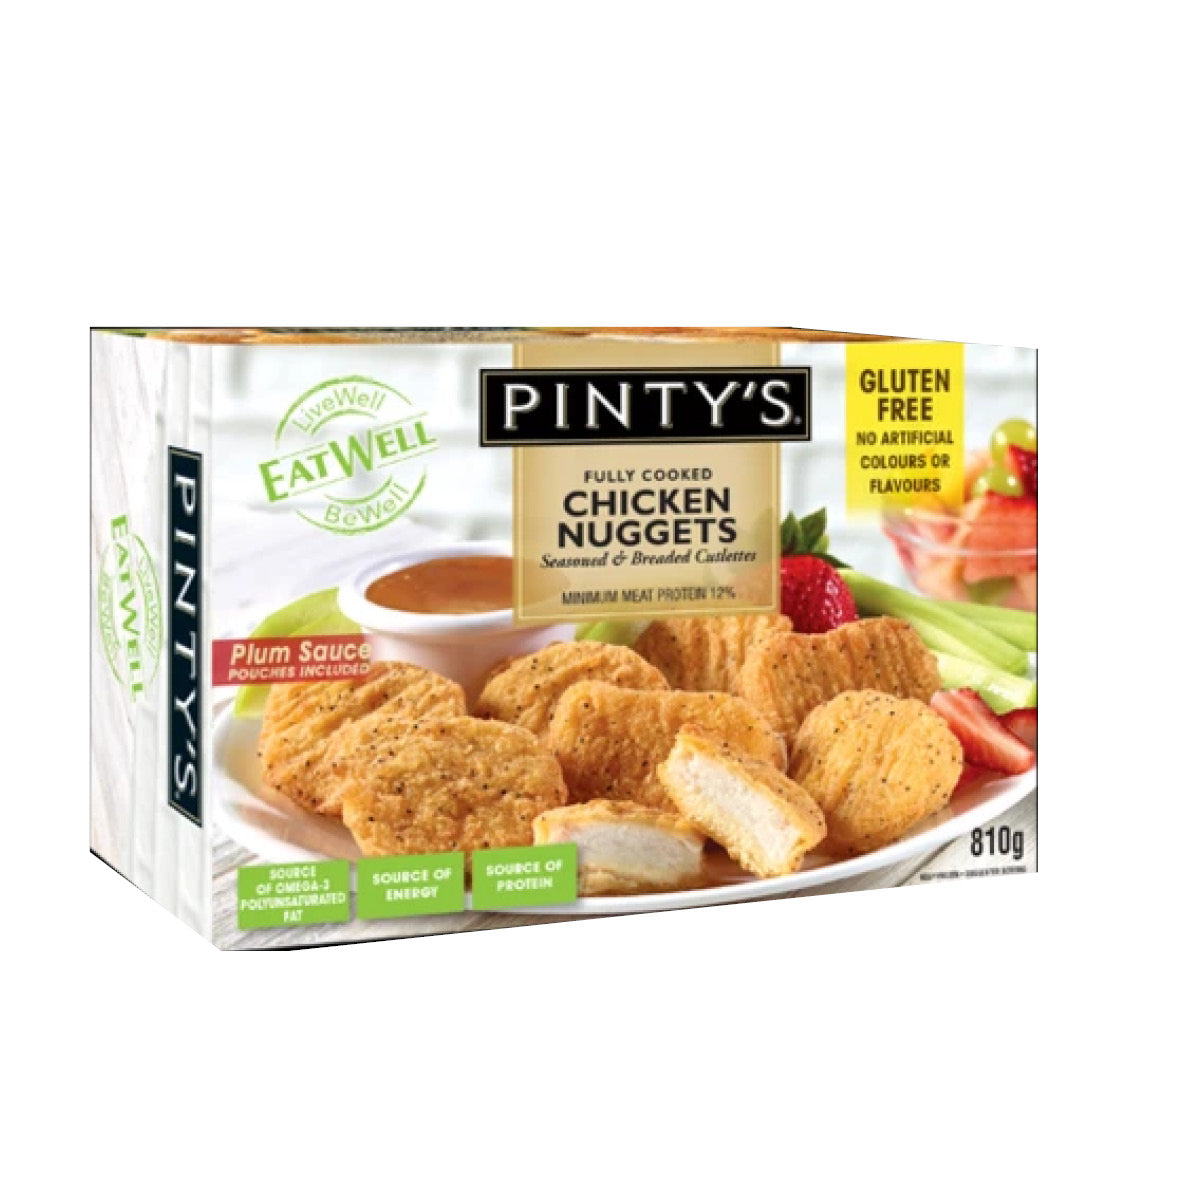 Pinty's Eat Well Chicken Nuggets, Gluten Free, 790g